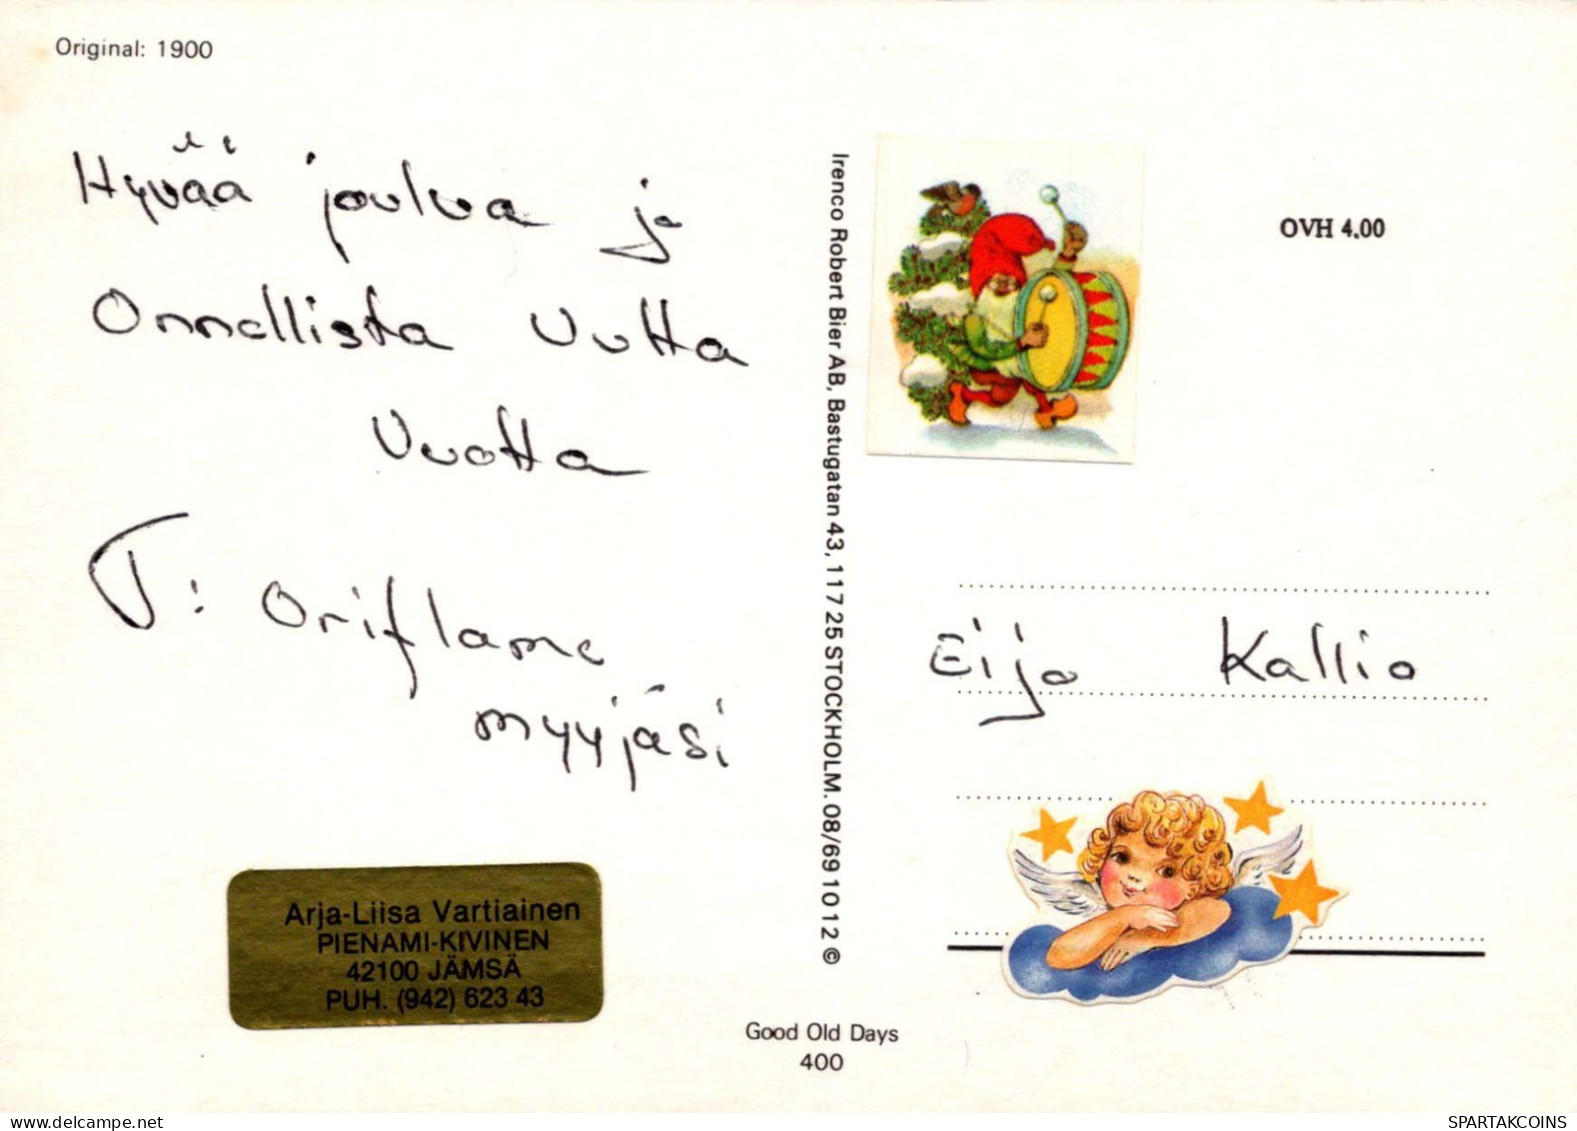 SANTA CLAUS Happy New Year Christmas LENTICULAR 3D Vintage Postcard CPSM #PAZ070.A - Santa Claus